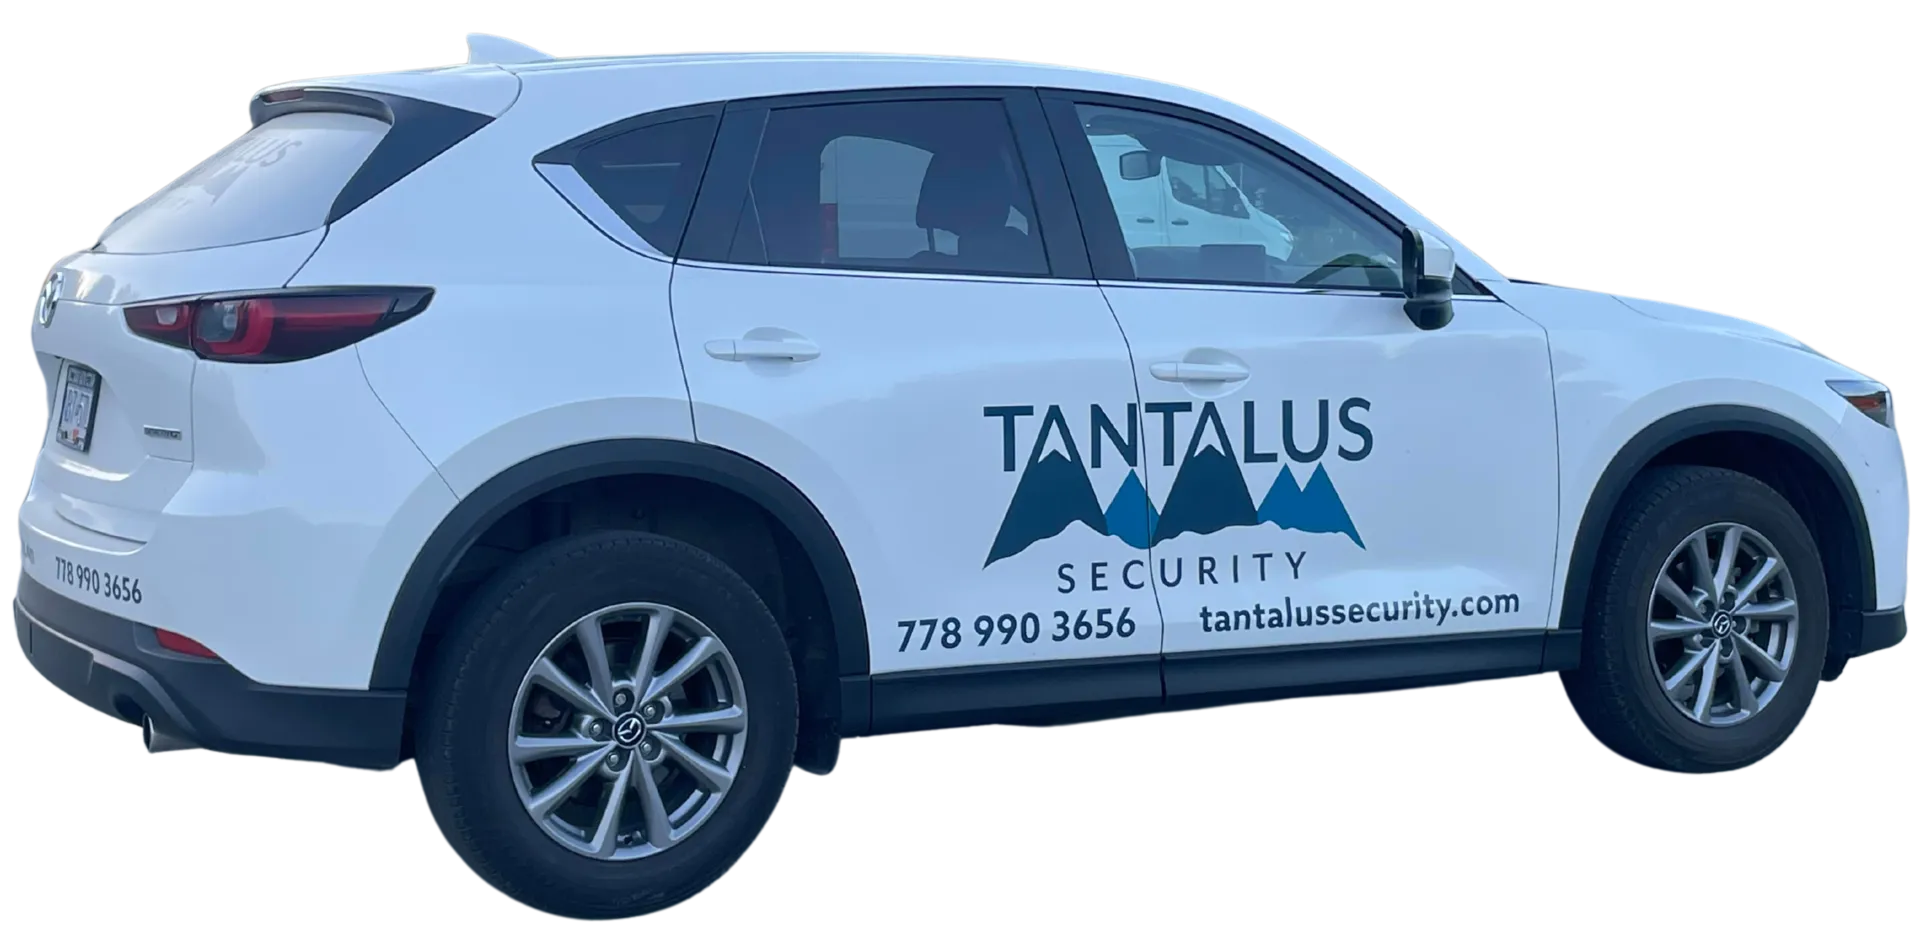 Tantalus Security Vehicle